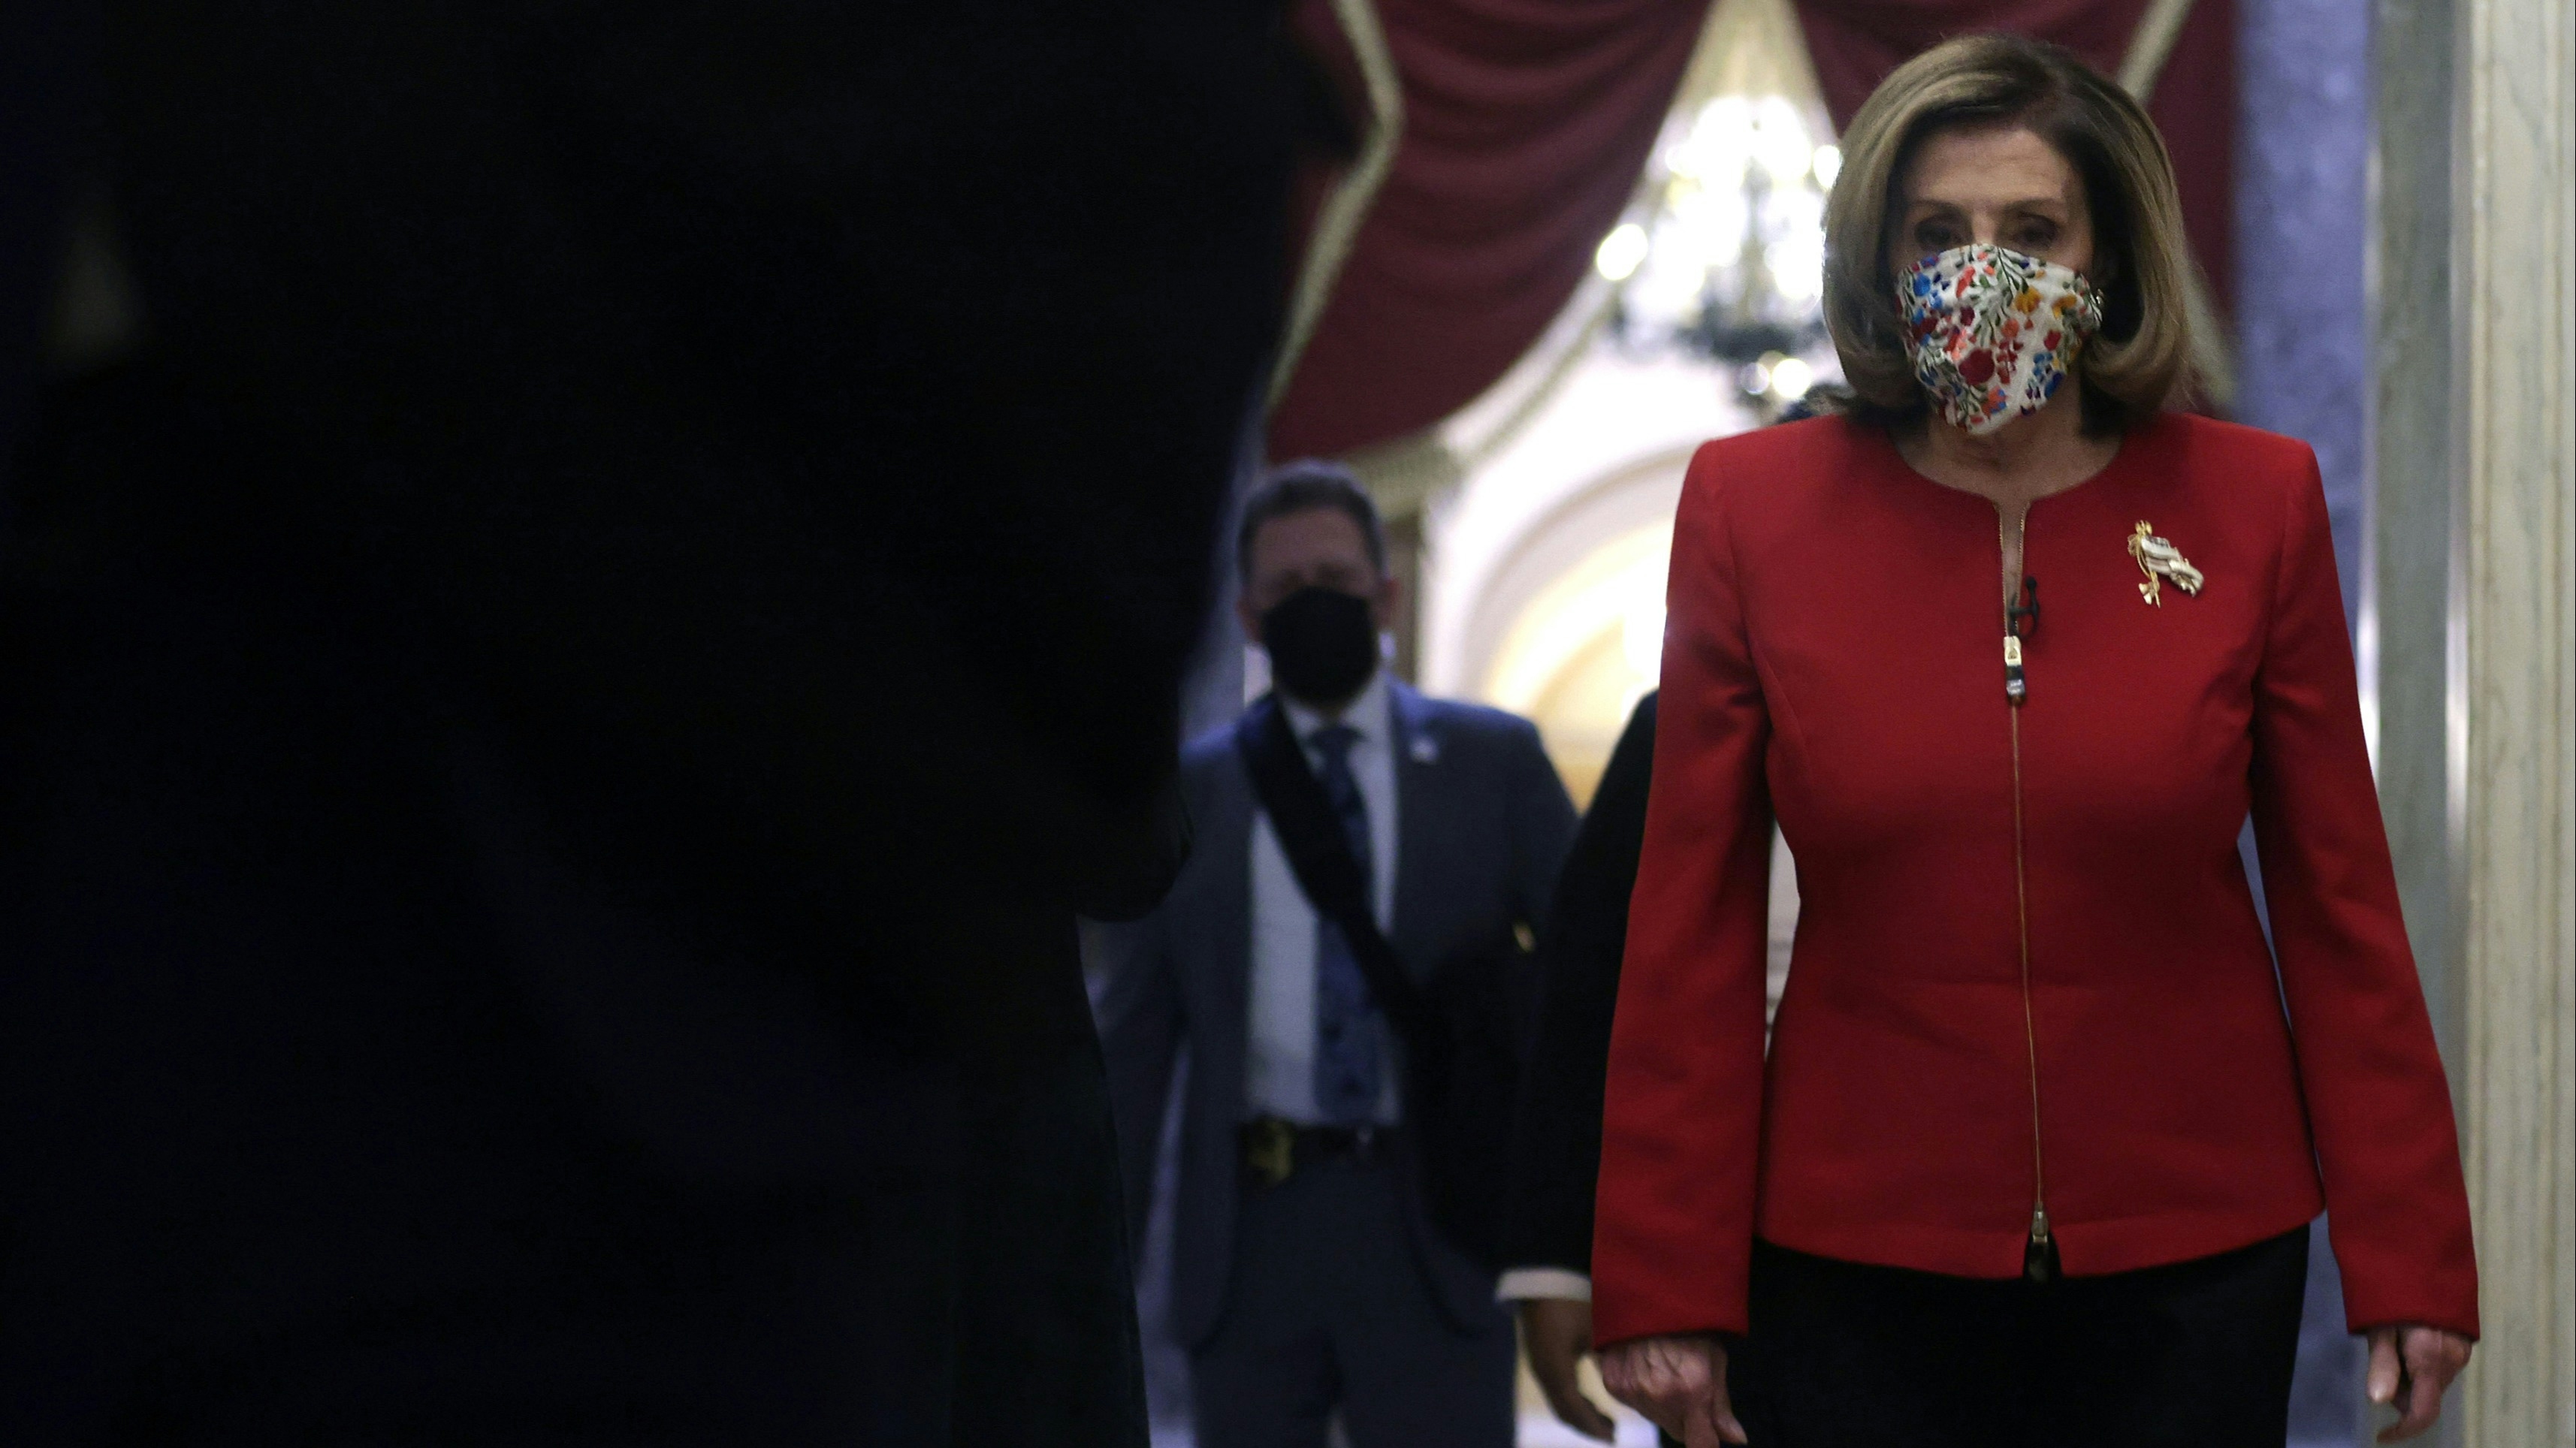 U.S. Speaker Rep. Nancy Pelosi (D-CA) walks in a hallway at the U.S. Capitol January 8, 2021 in Washington, DC